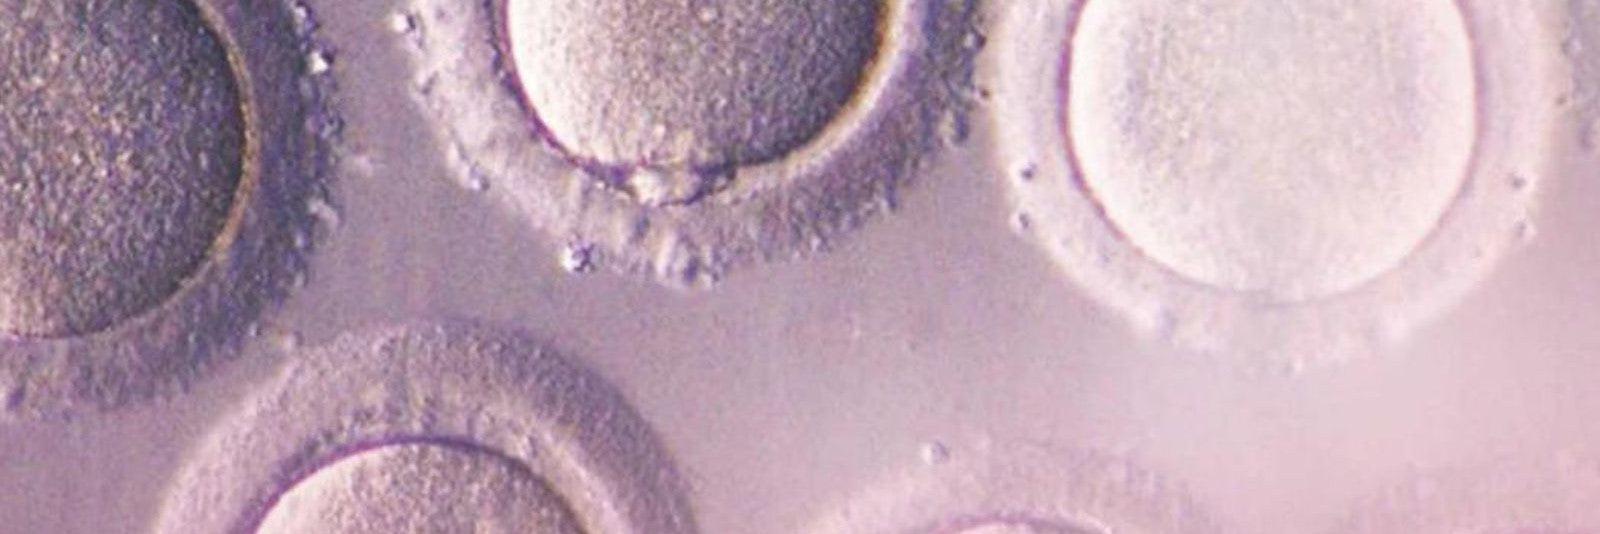 Vue au microscope d'ovocytes féminins